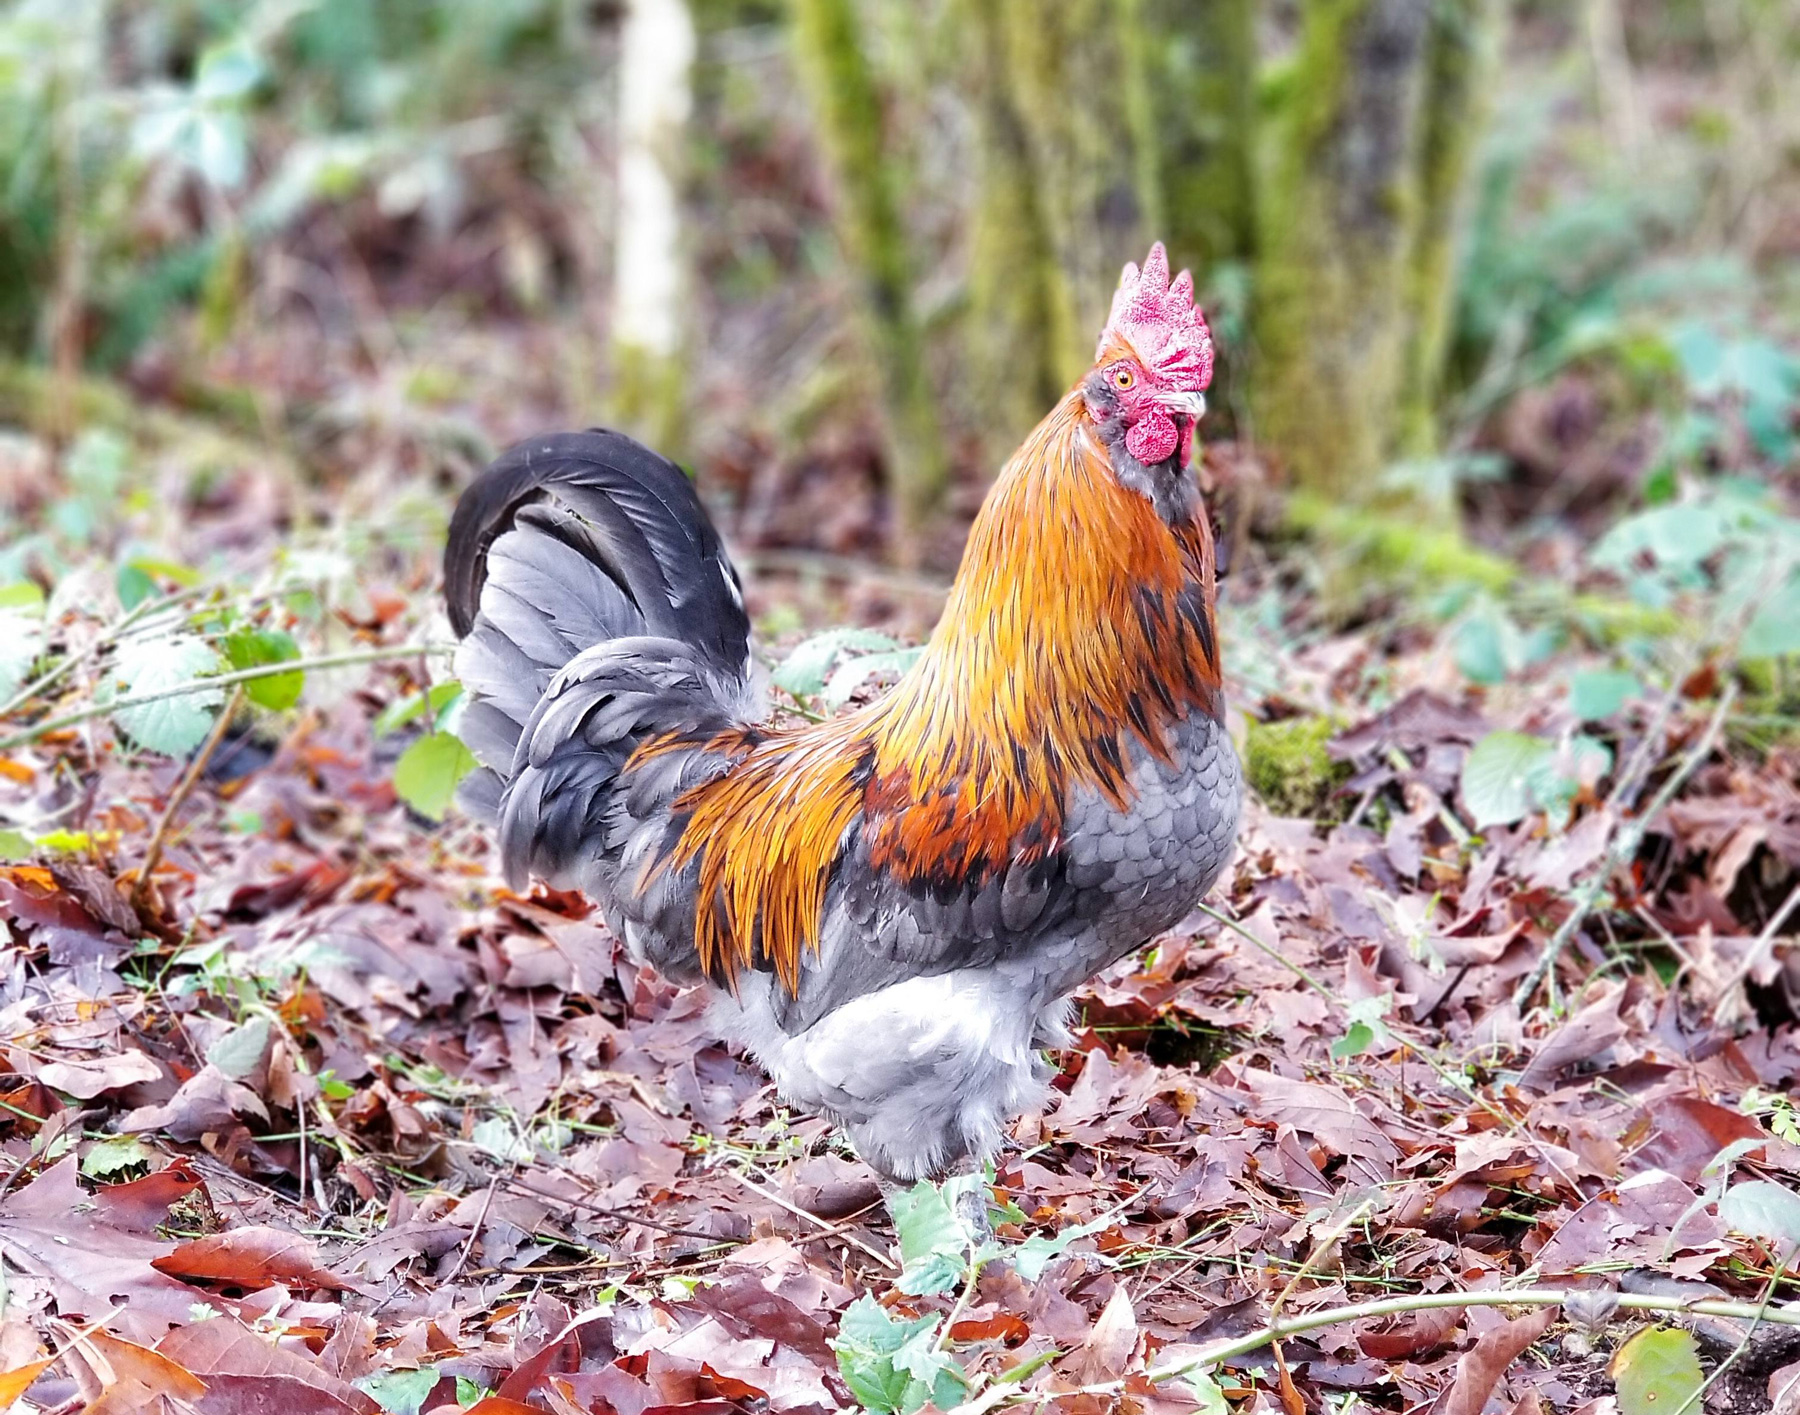 McMurray Hatchery | Homesteading | Raising Free Range Poultry